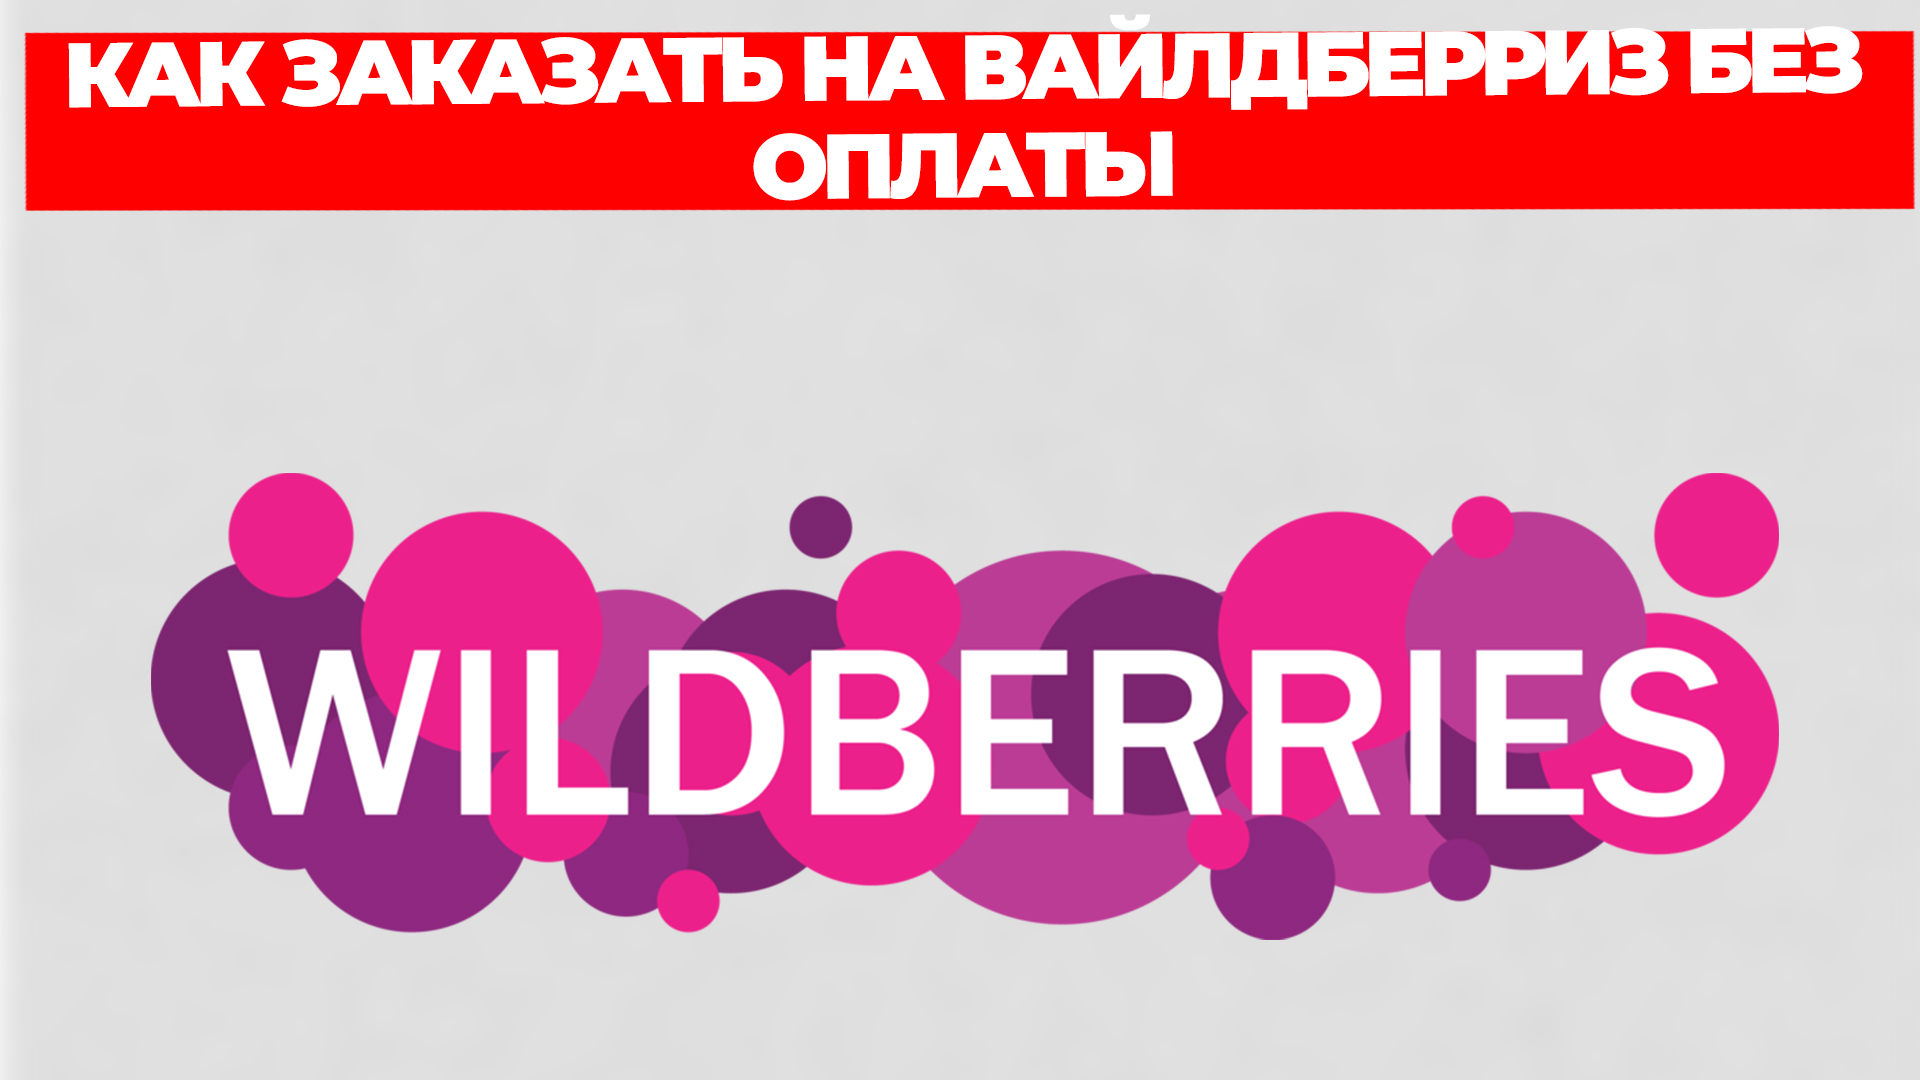 Вкладыш вайлдберриз. Вайлдберриз. Wildberries лого. Wildberries интернет магазин. Wildberries иконка.